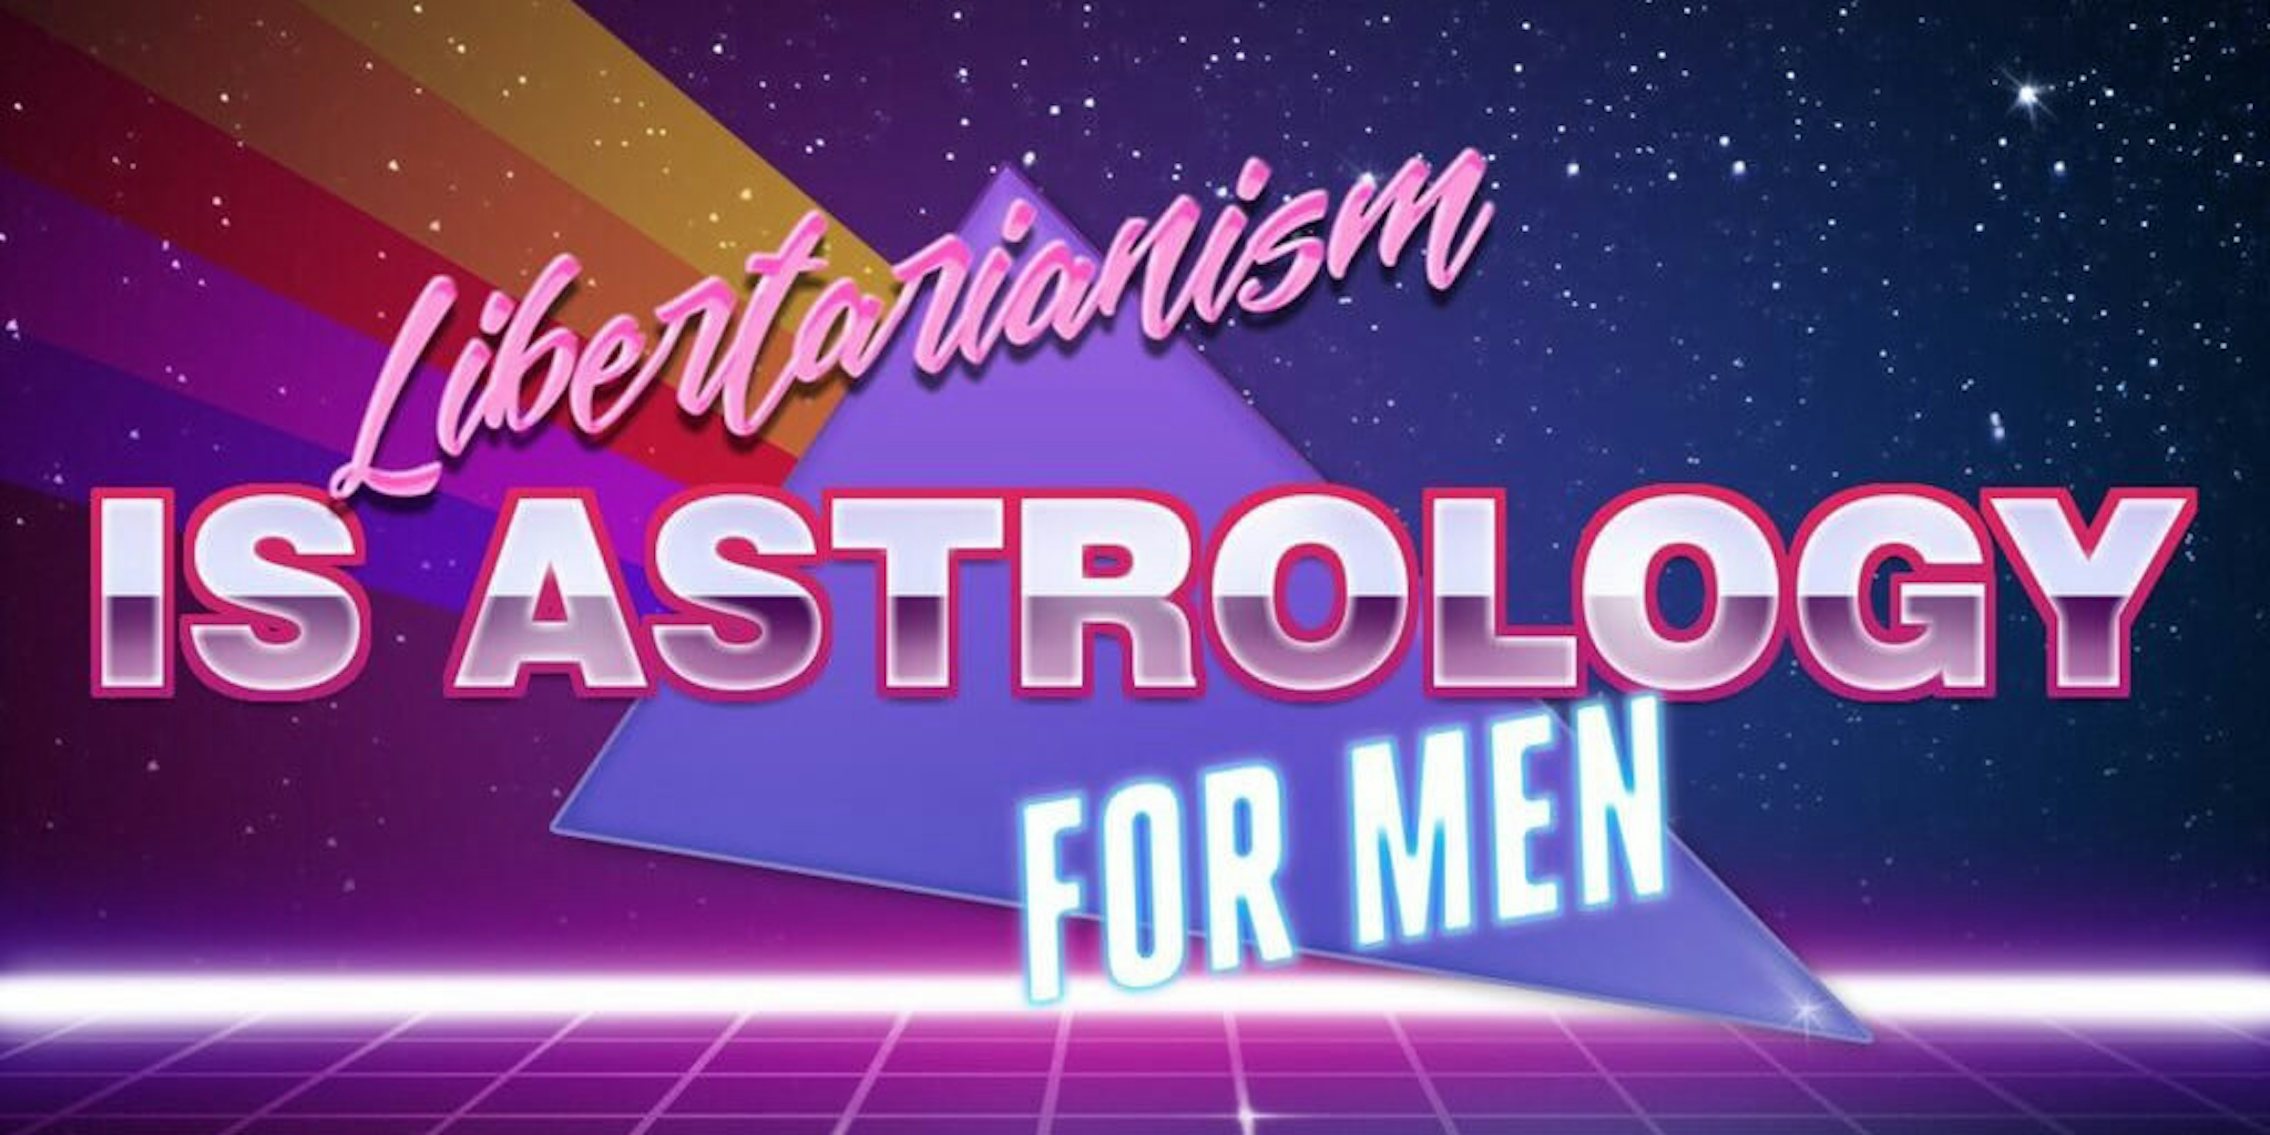 Astrology for men